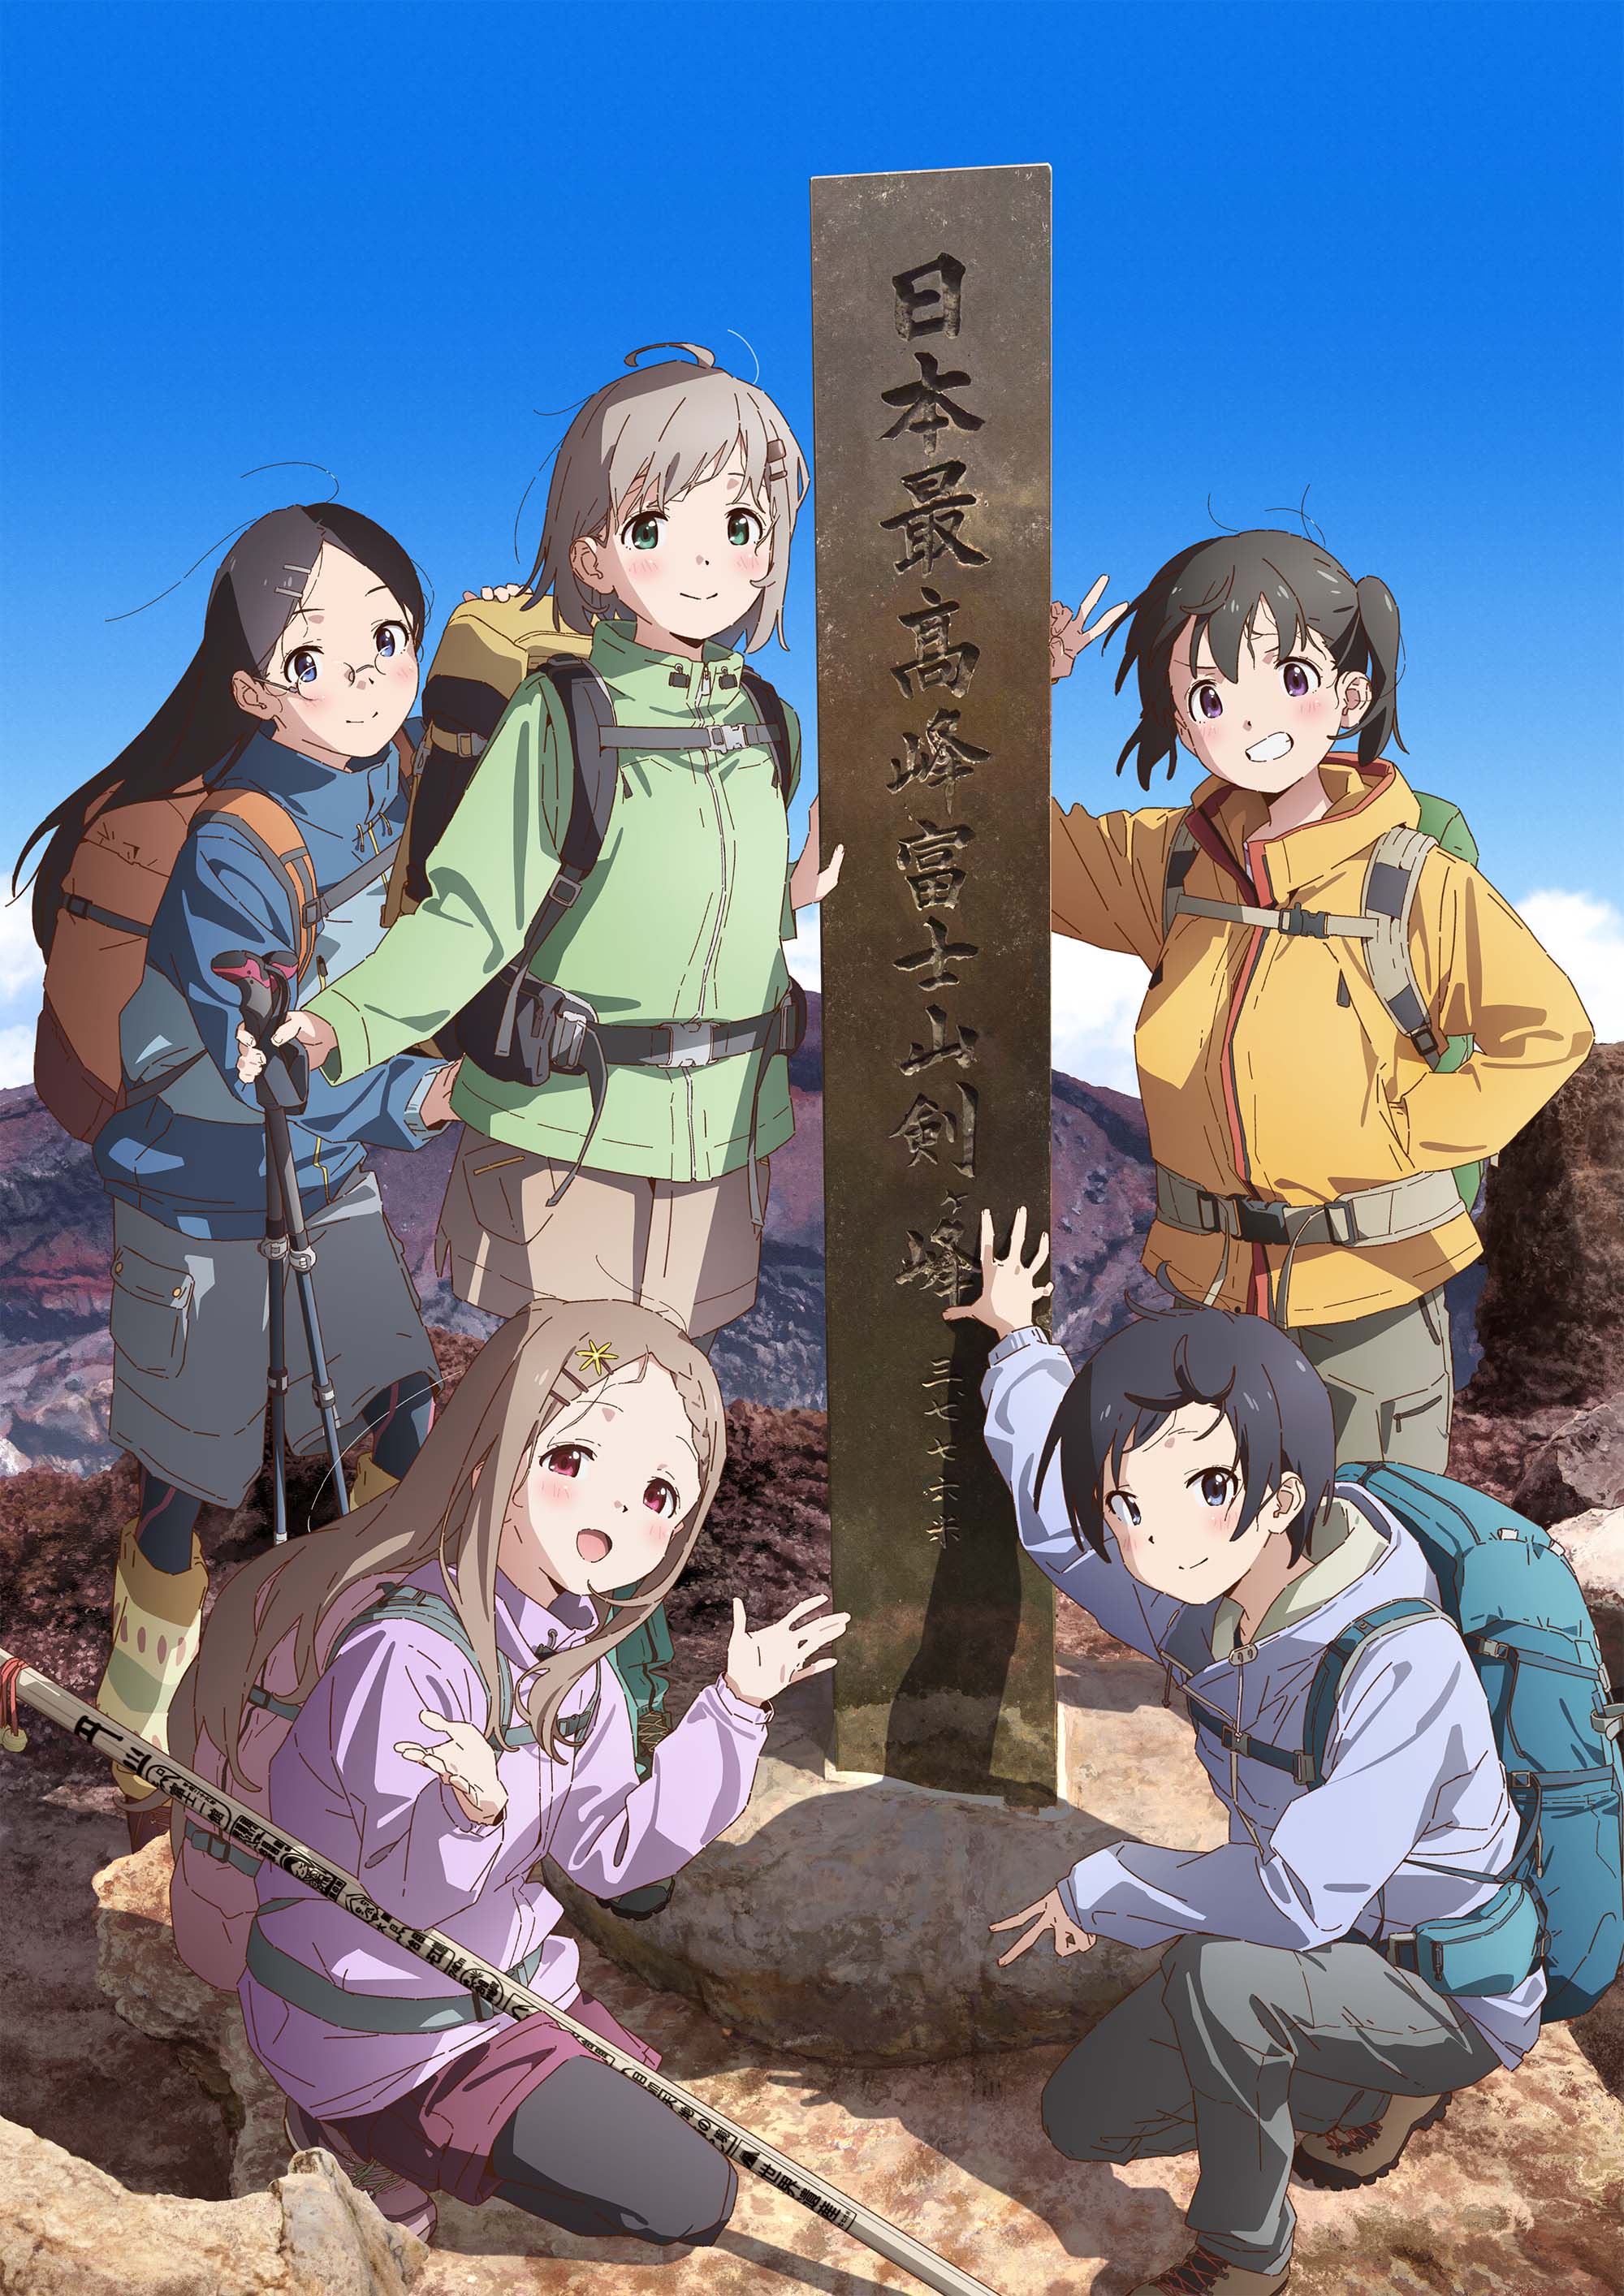 Encouragement of Climb Next Summit Saison 4 Anime Bande-annonce Vidéo Teaser Trailer Yama no Susume Manga Shiro Escalade Randonnée Crunchyroll 